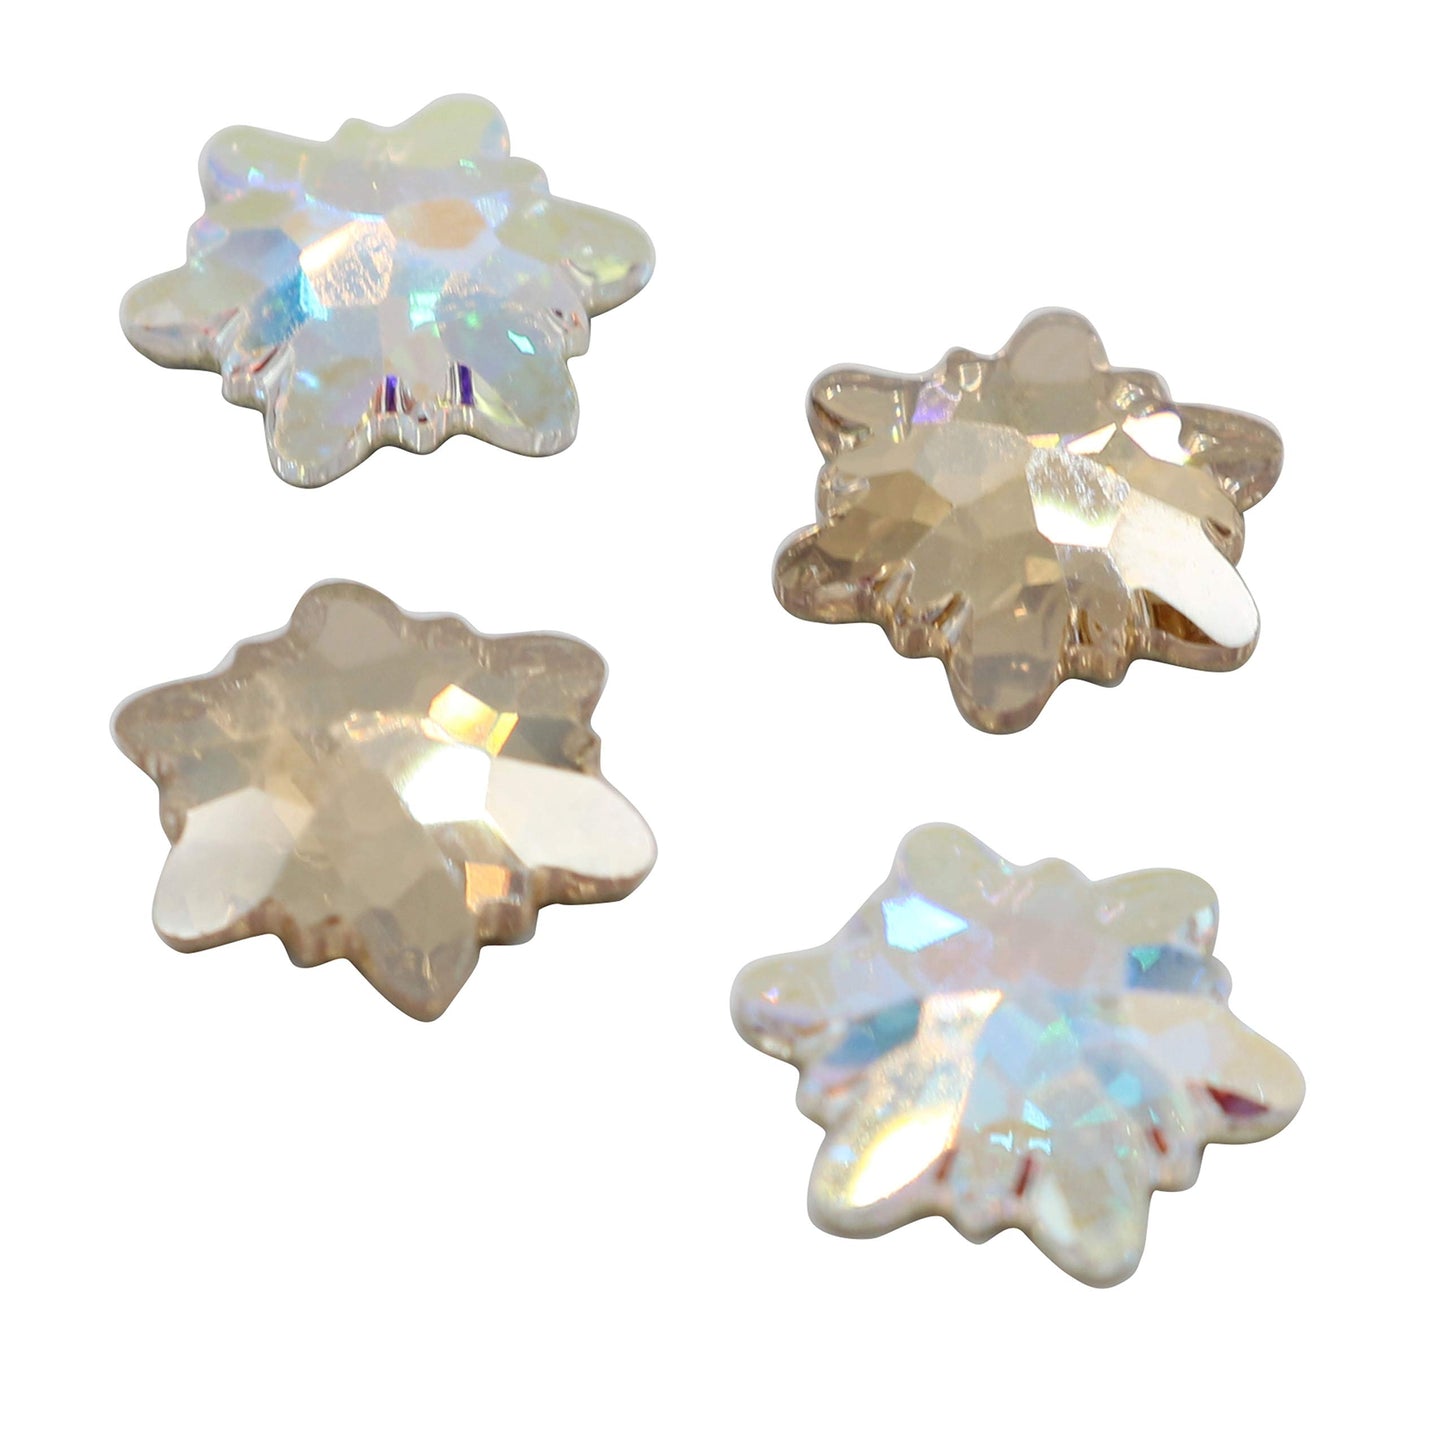 Swarovski 2753 Edelweiss Flatbacks Crystals Nail Art Rhinestones, 2 Colors (Crystal AB and Crystal Golden Shadow) - 4 Pieces